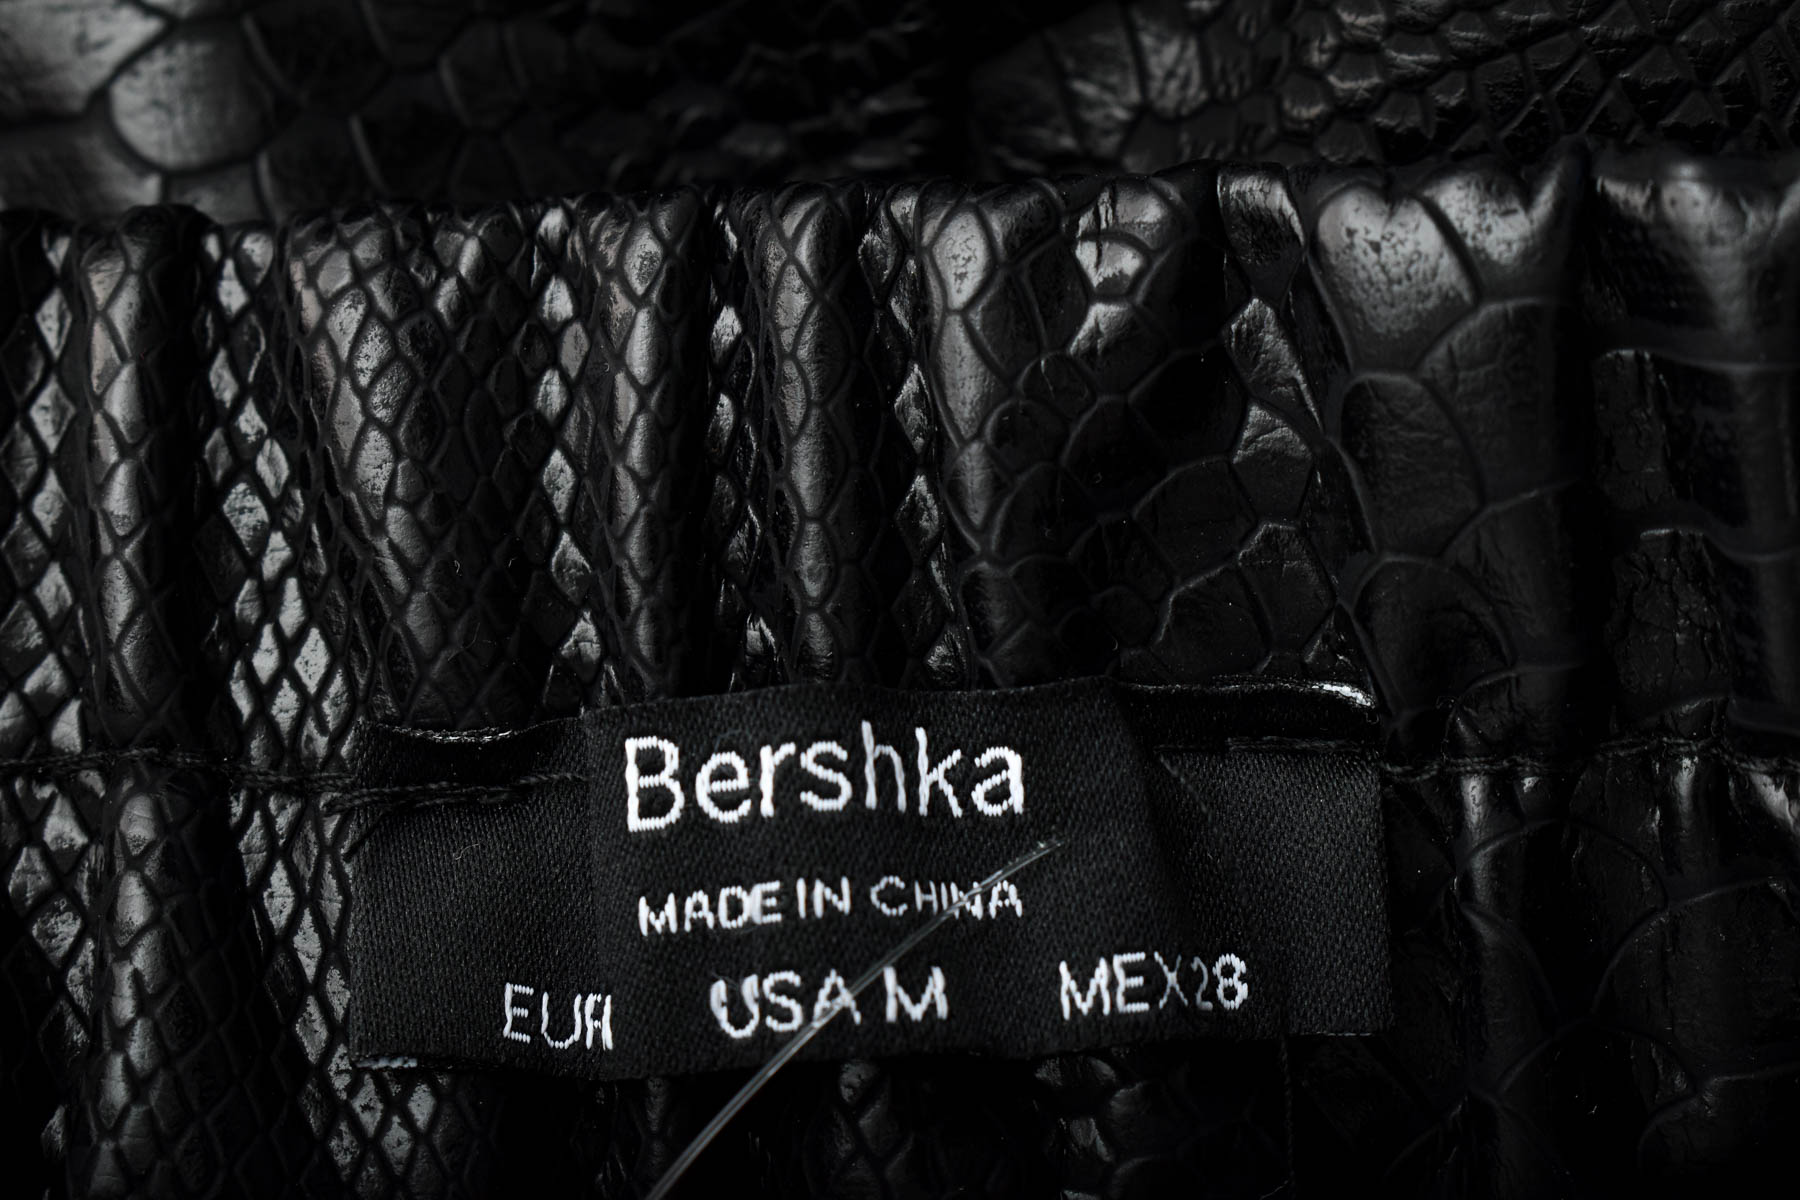 Skórzana spódnica - Bershka - 2